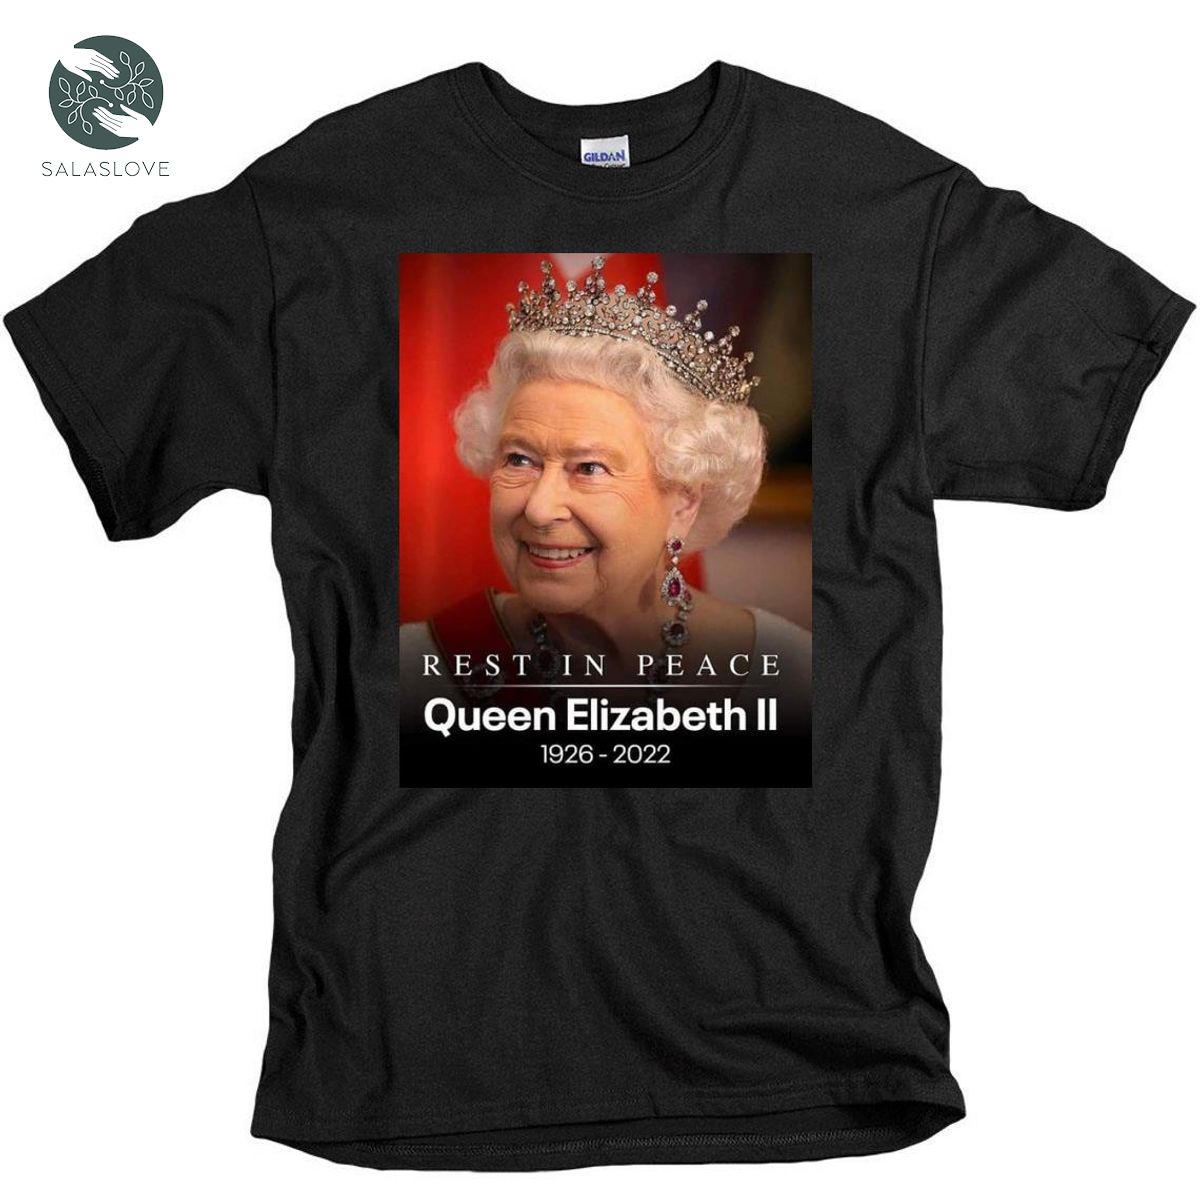 Rest In Place Queen Elizabeth II 1926 - 2022 T-Shirt